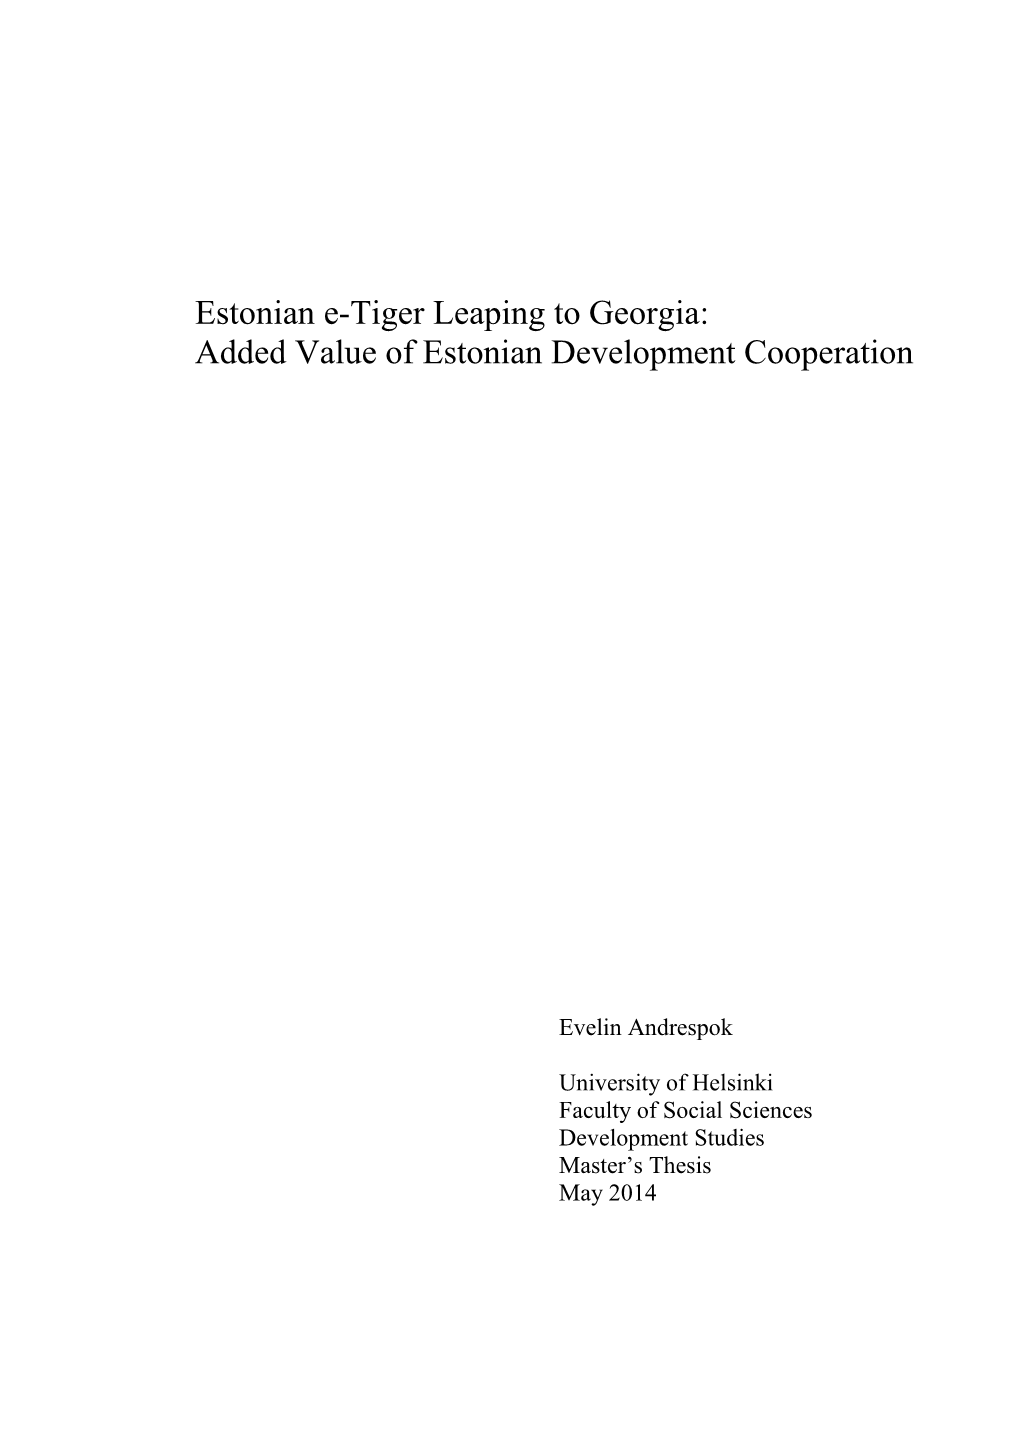 Estonian E-Tiger Leaping to Georgia: Added Value of Estonian Development Cooperation